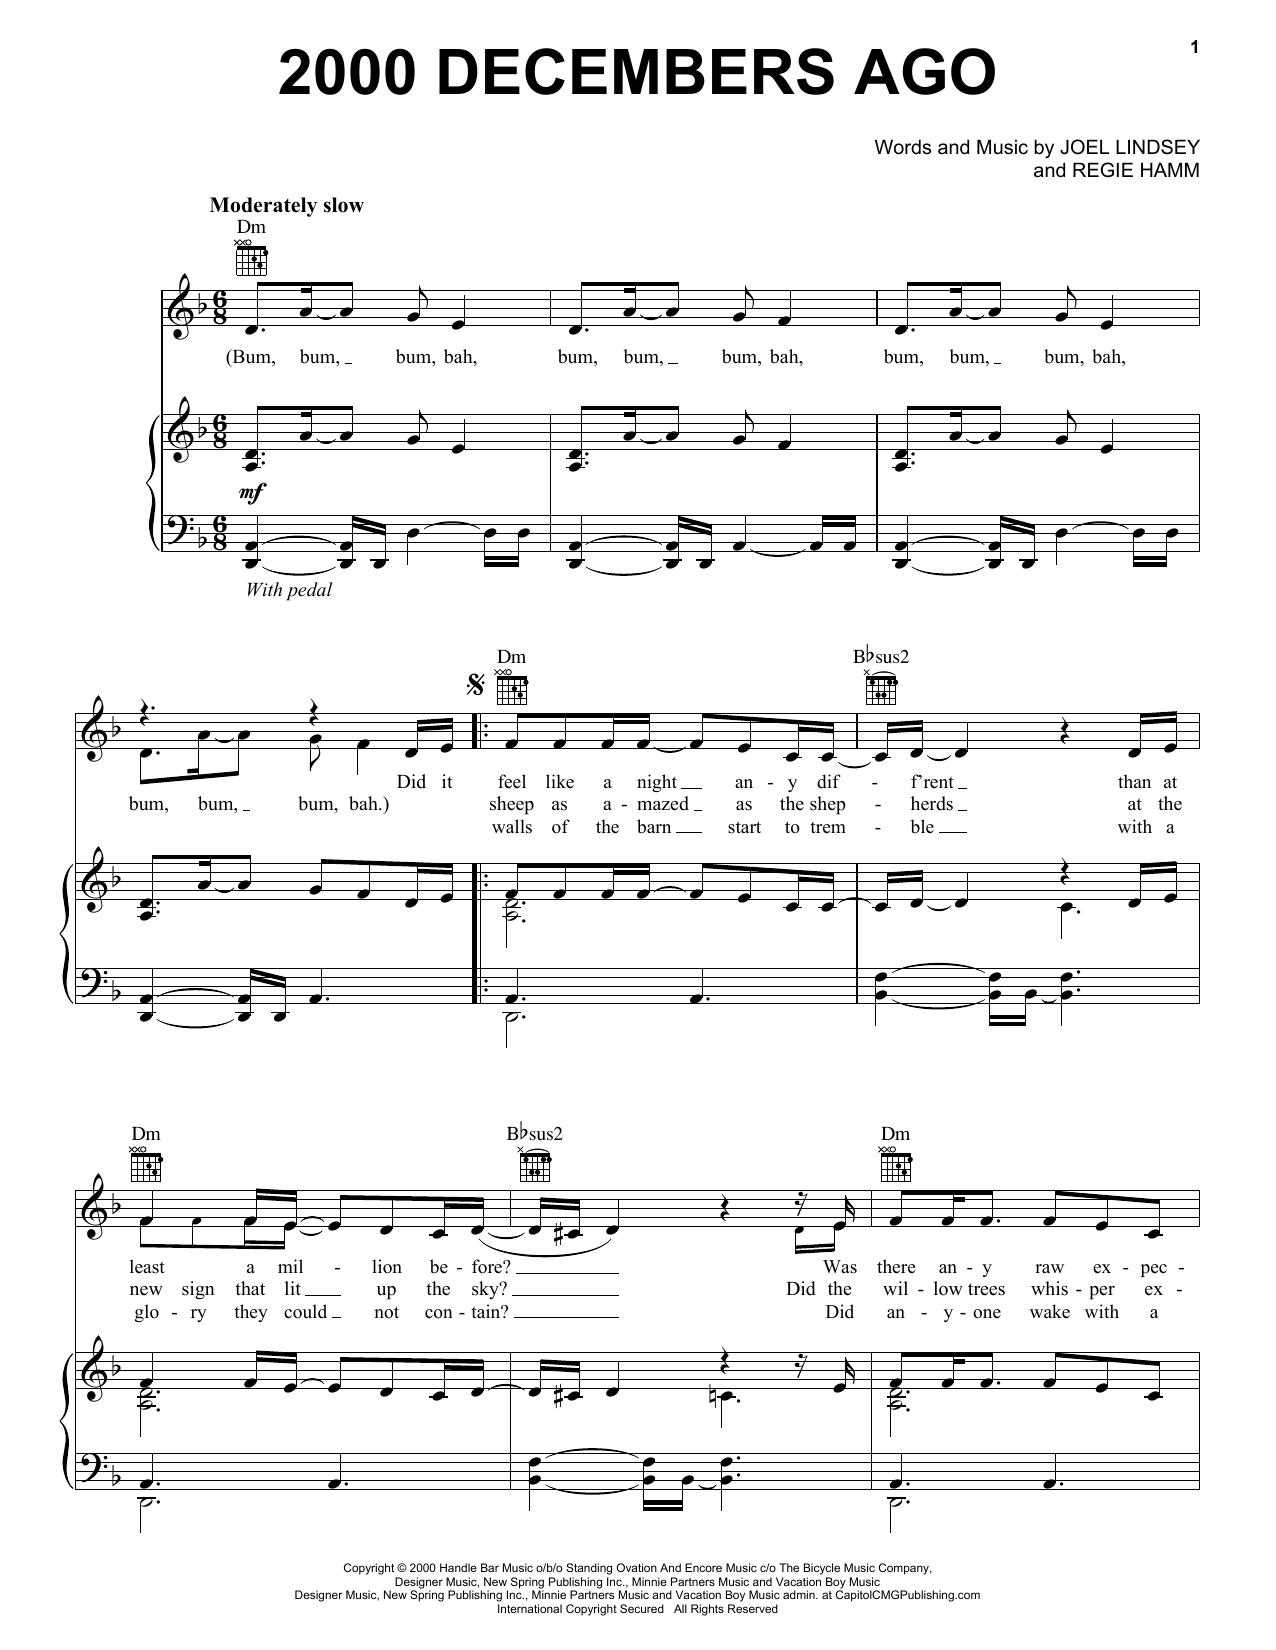 Joy Williams 2000 Decembers Ago Sheet Music Notes & Chords for Ukulele - Download or Print PDF